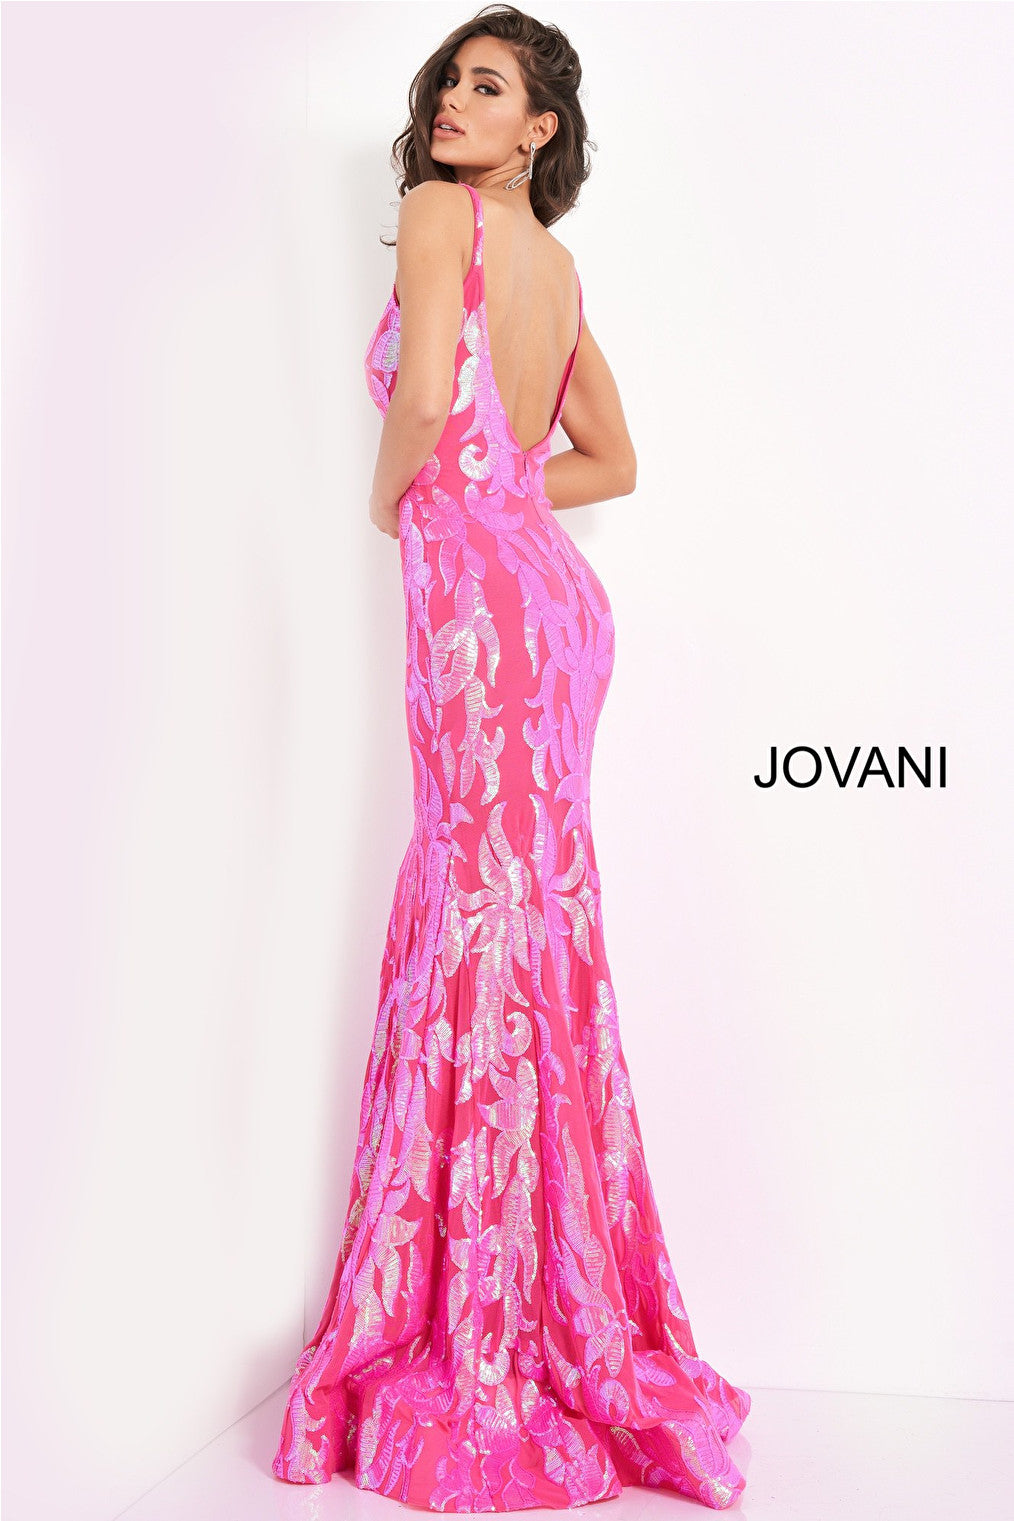 Jovani 3263 hot pink open back dress